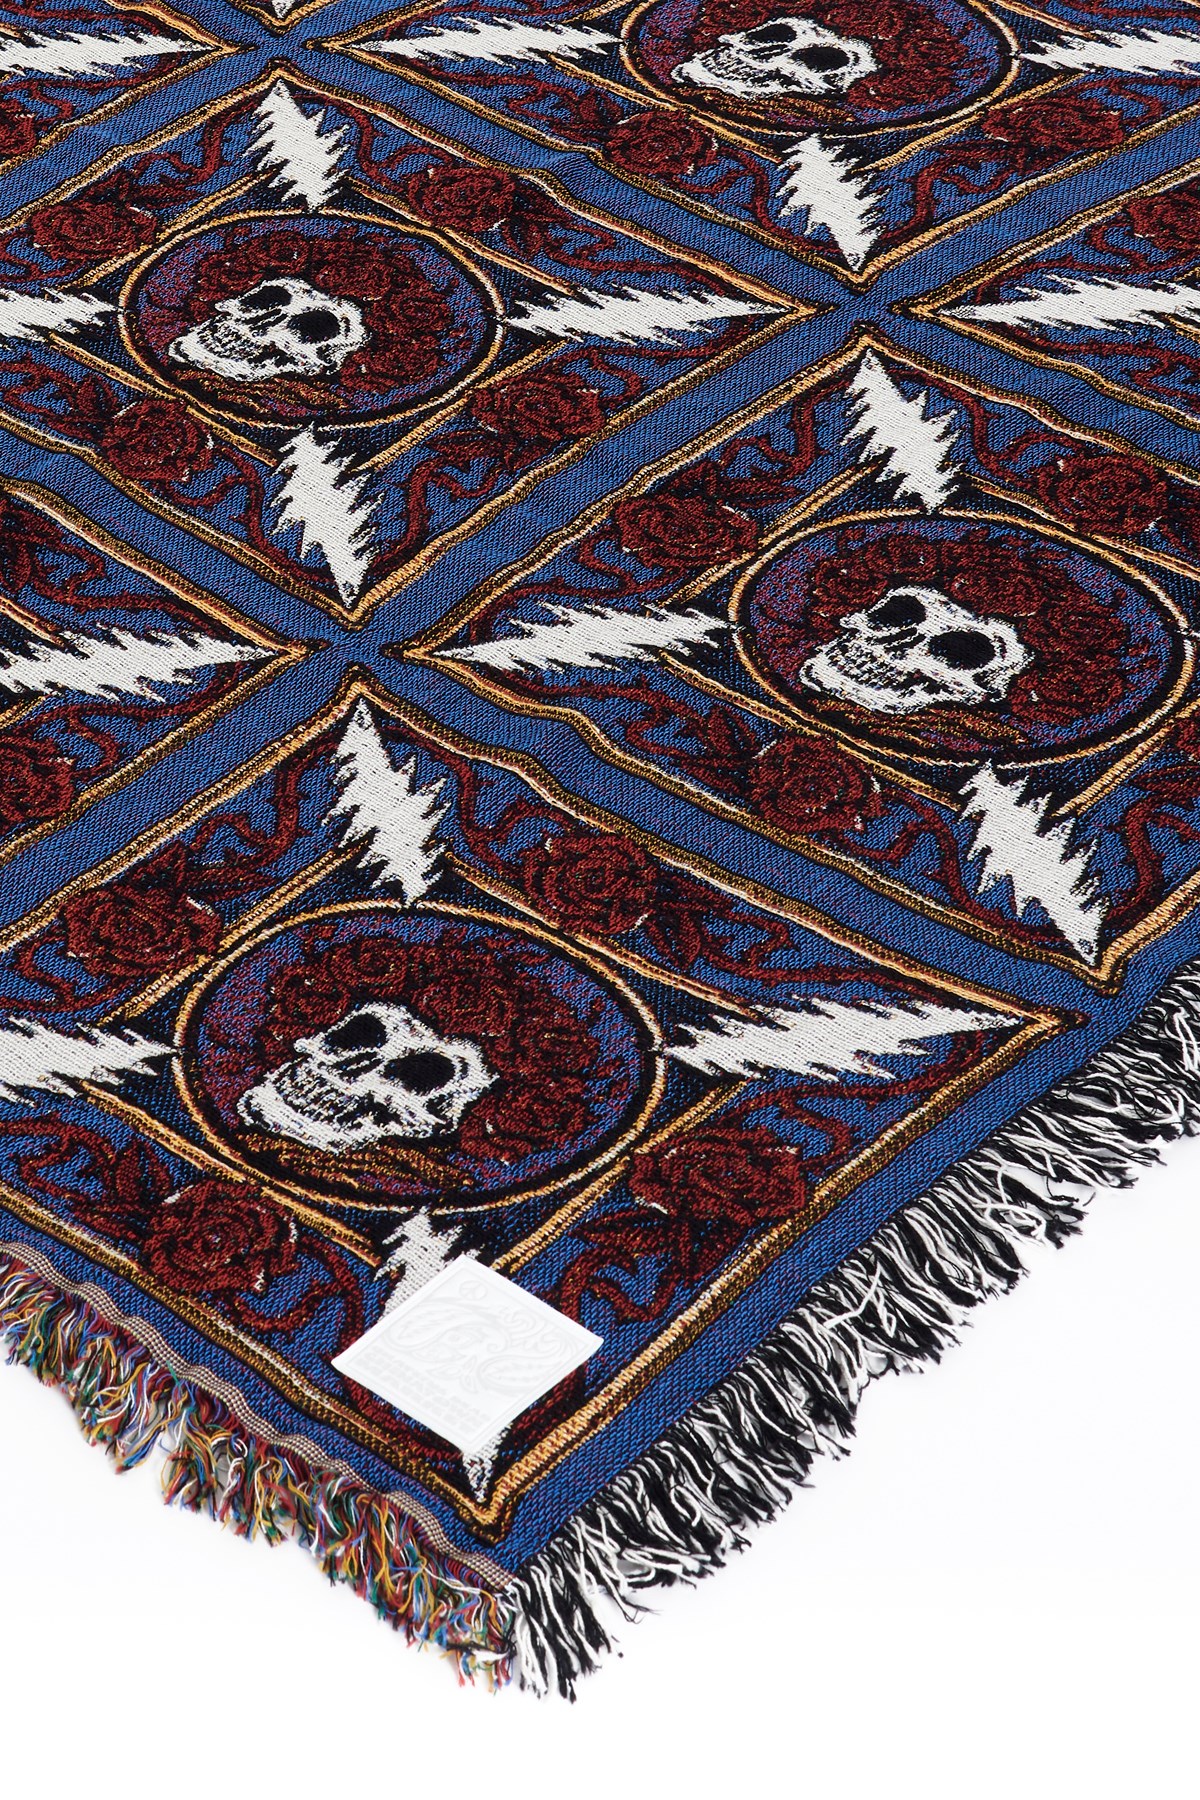 CHINATOWN MARKET Grateful Dead Capsule Carpet